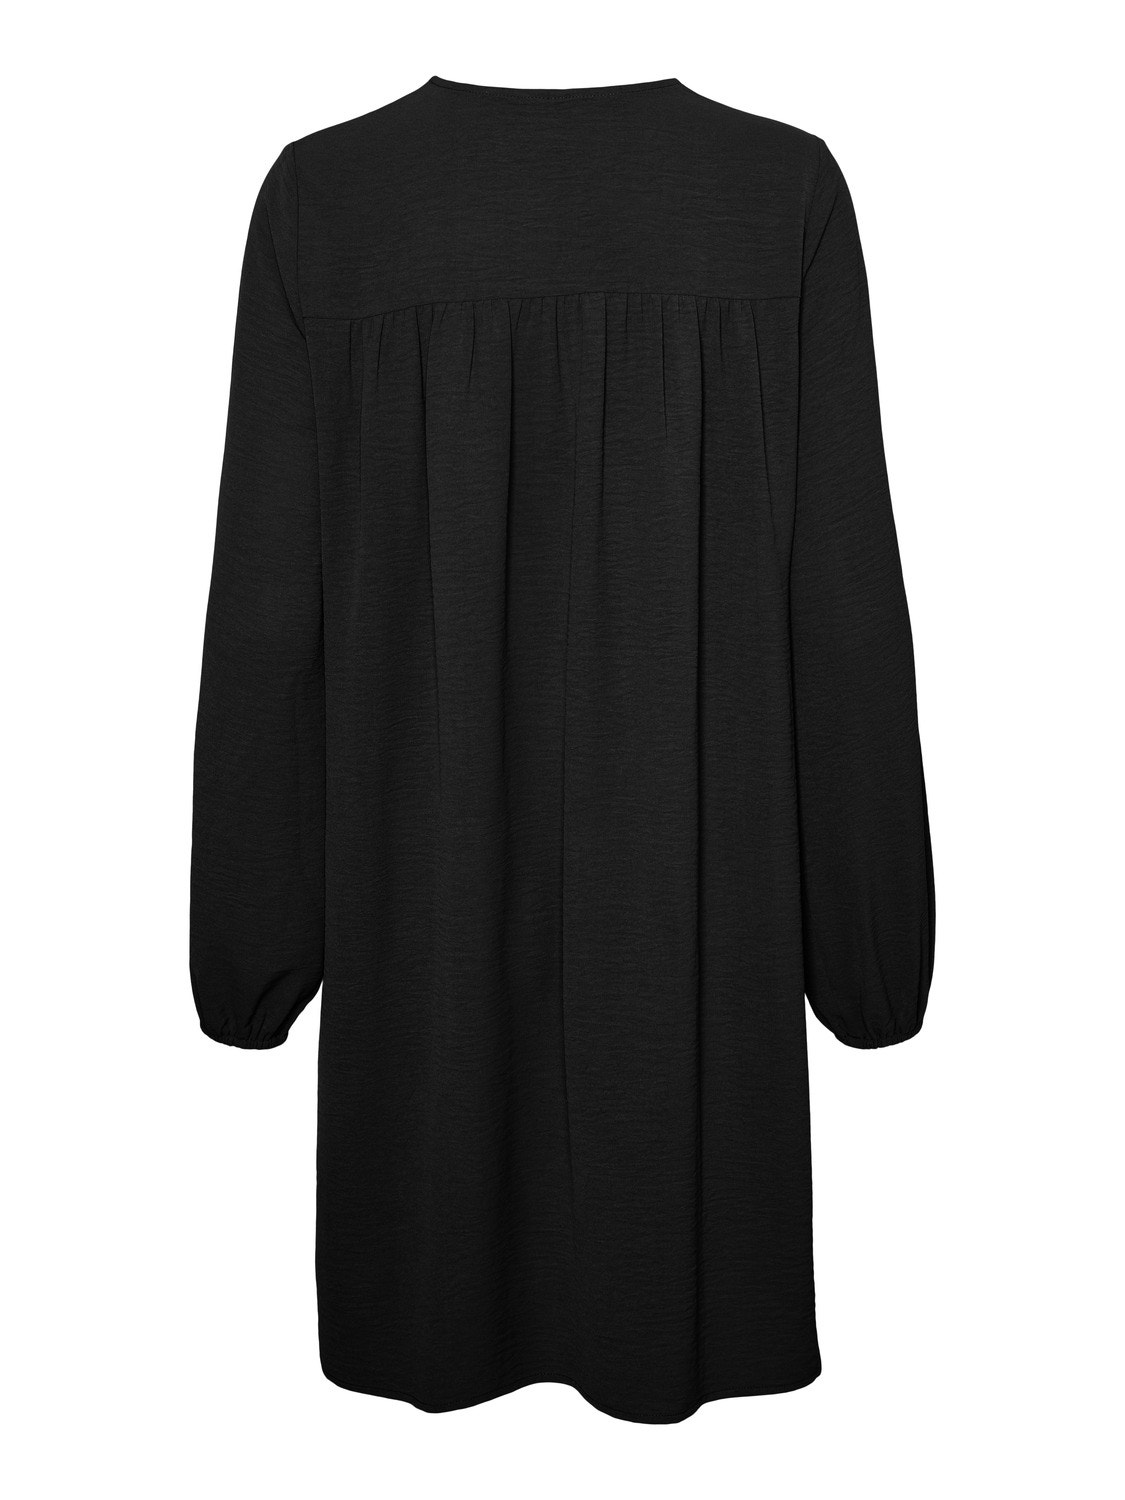 Vero Moda VMALVA Short dress -Black - 10301136